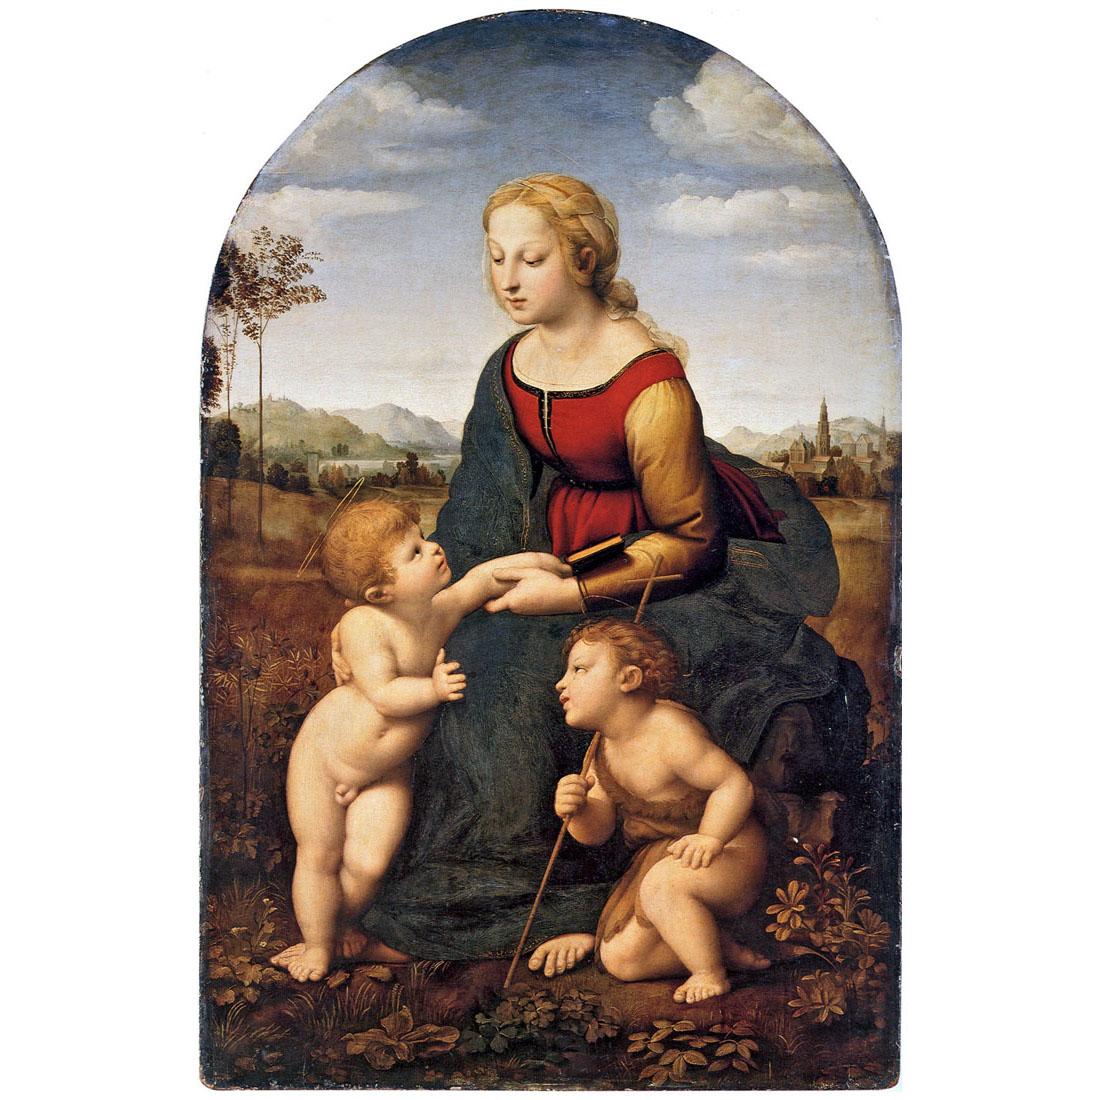 Raffaello Sanzio. La belle jardiniere. 1507. Louvre Paris